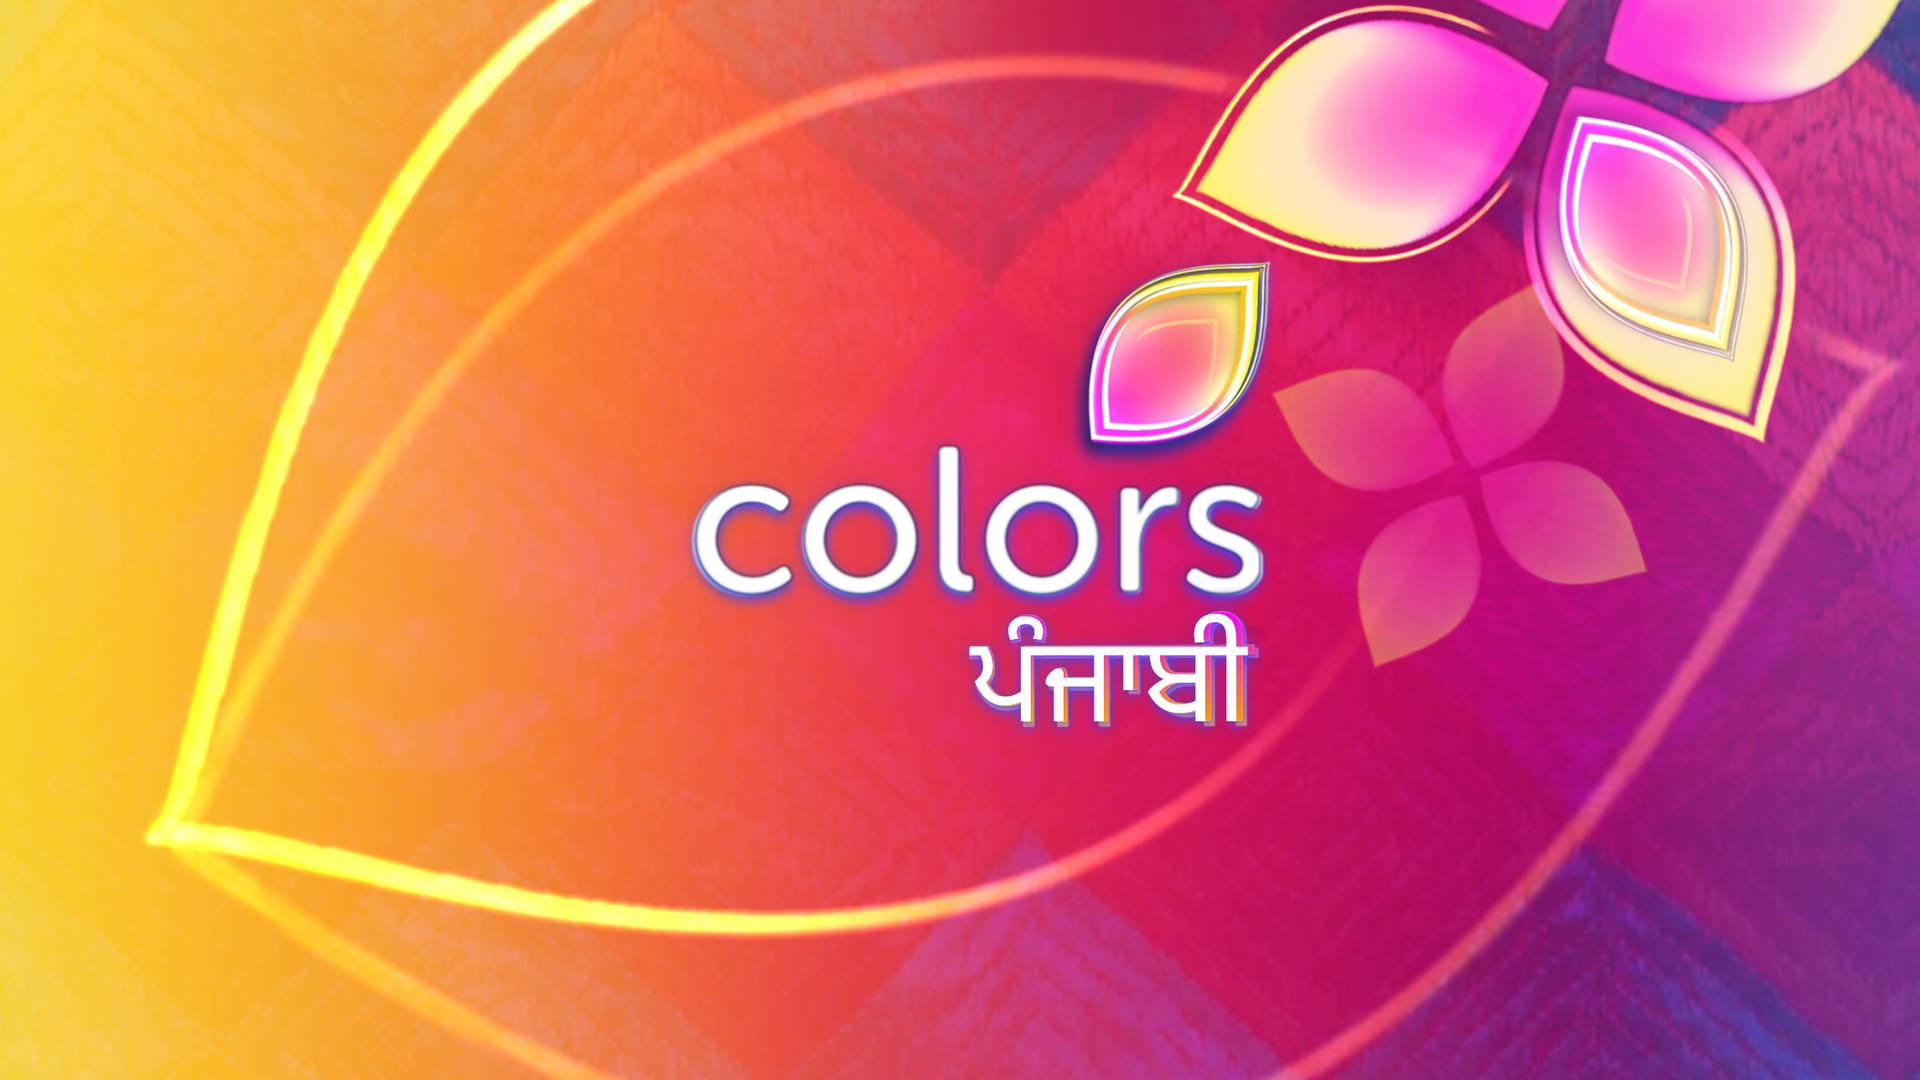 Colors TV Colorful Wallpaper